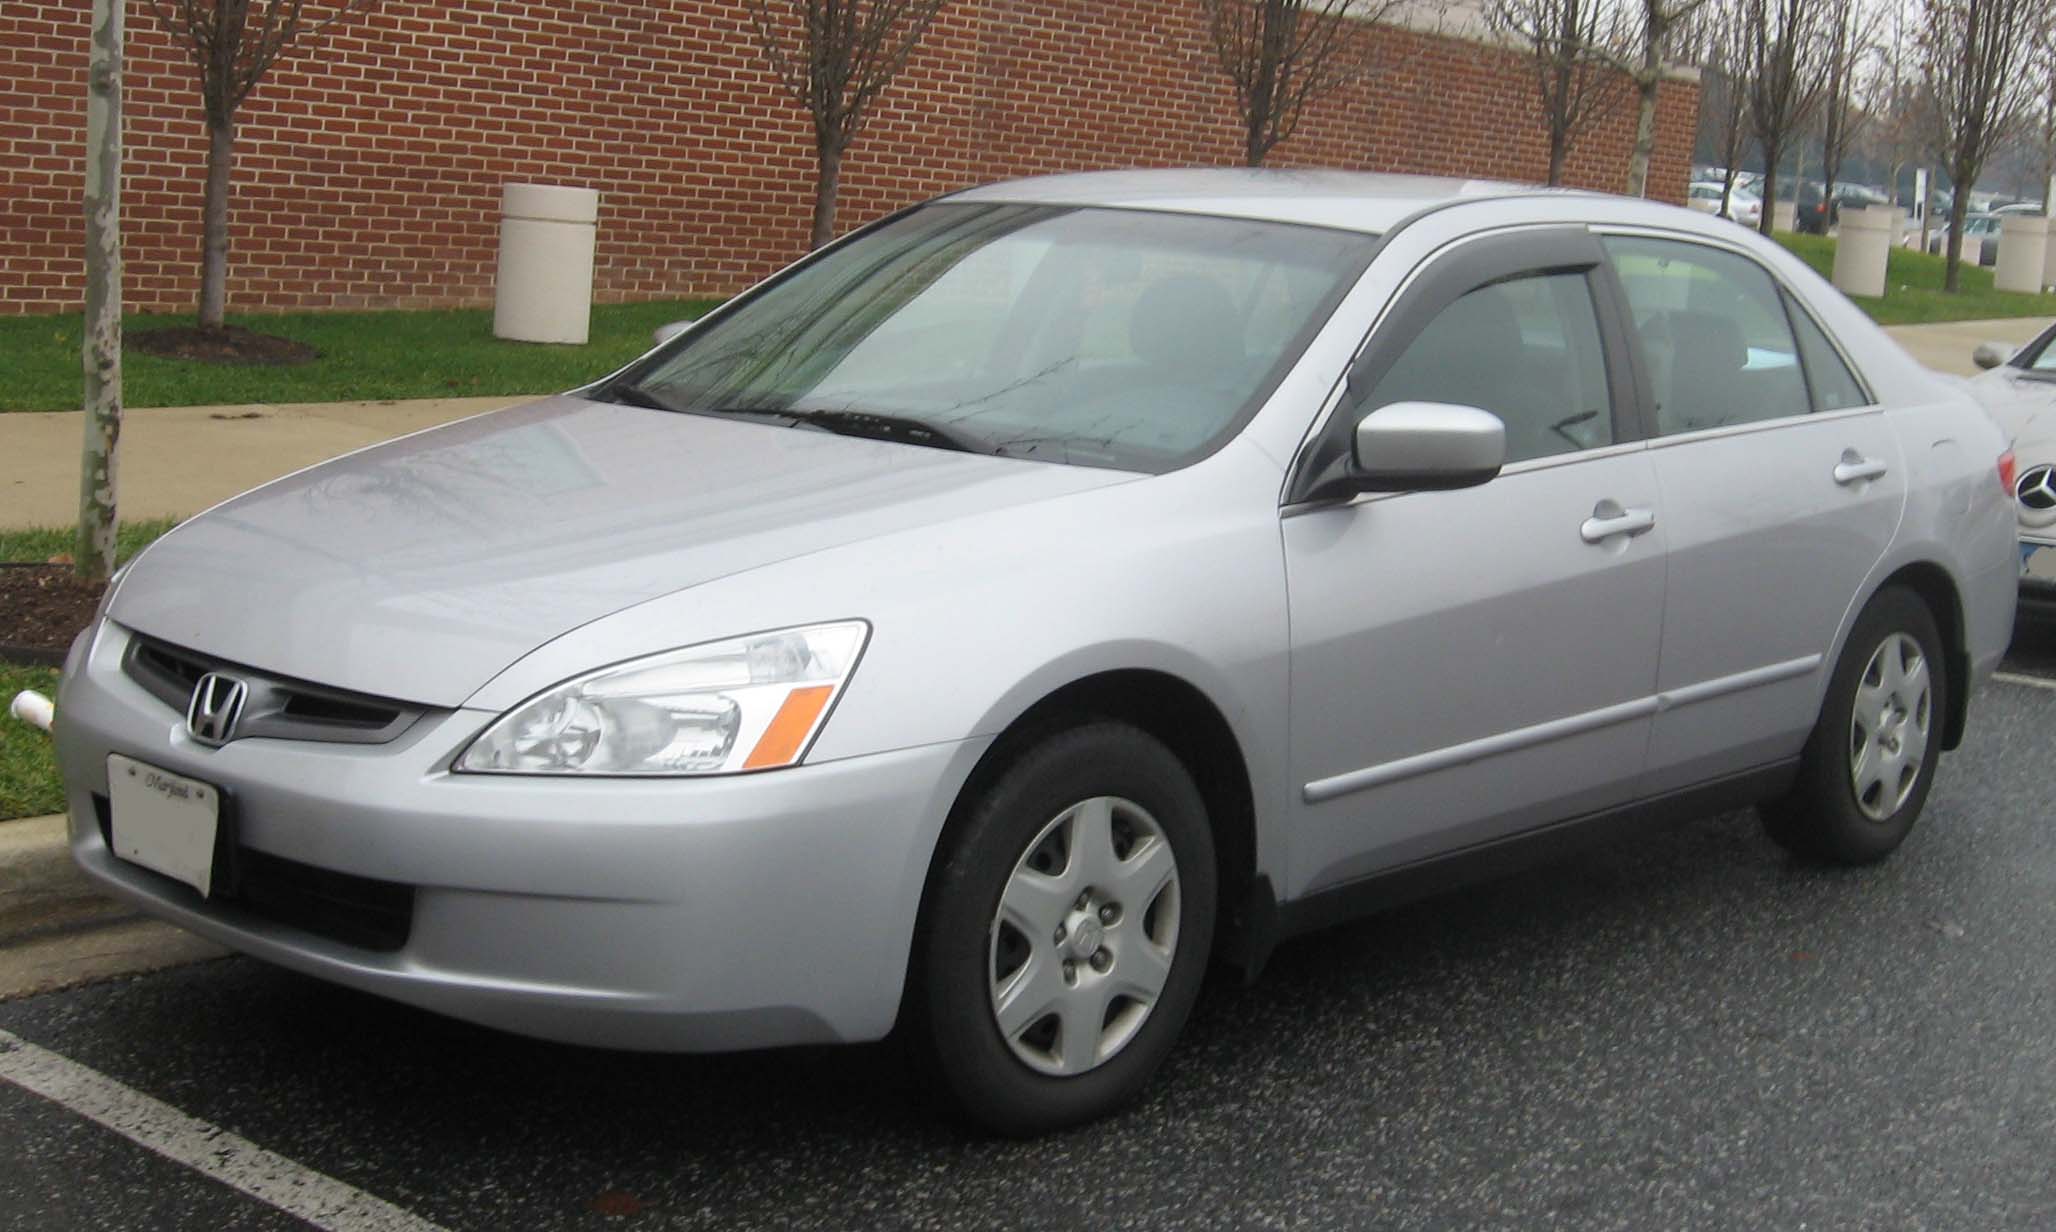 File:2003-2004 Honda Accord LX sedan.jpg - Wikimedia Commons